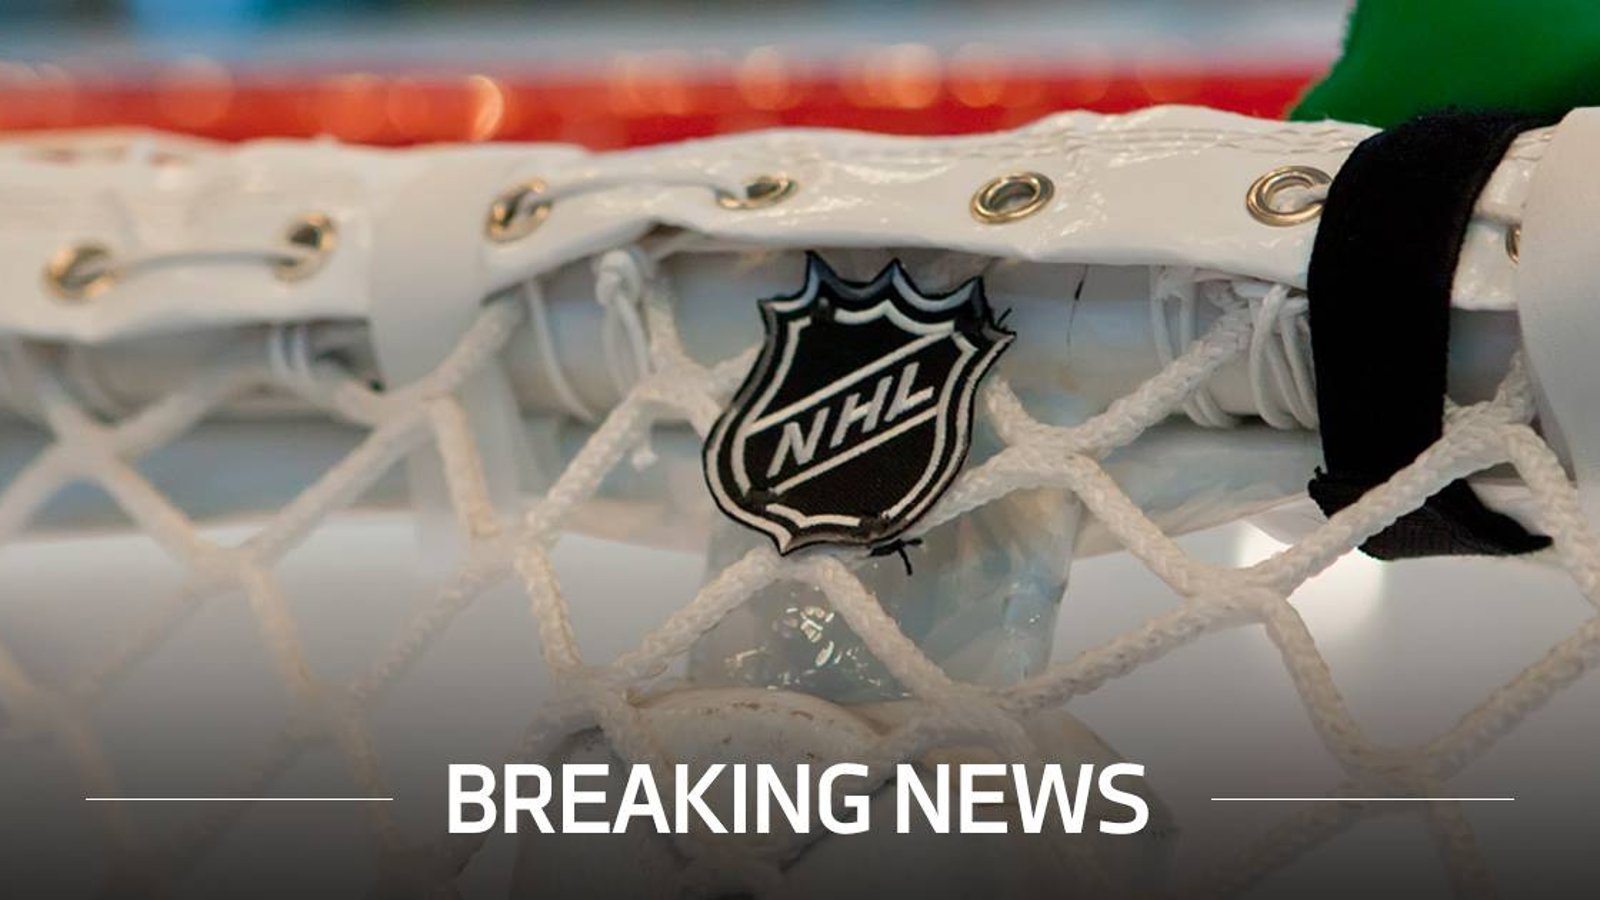 NHL announces rule change concerning offside calls! 